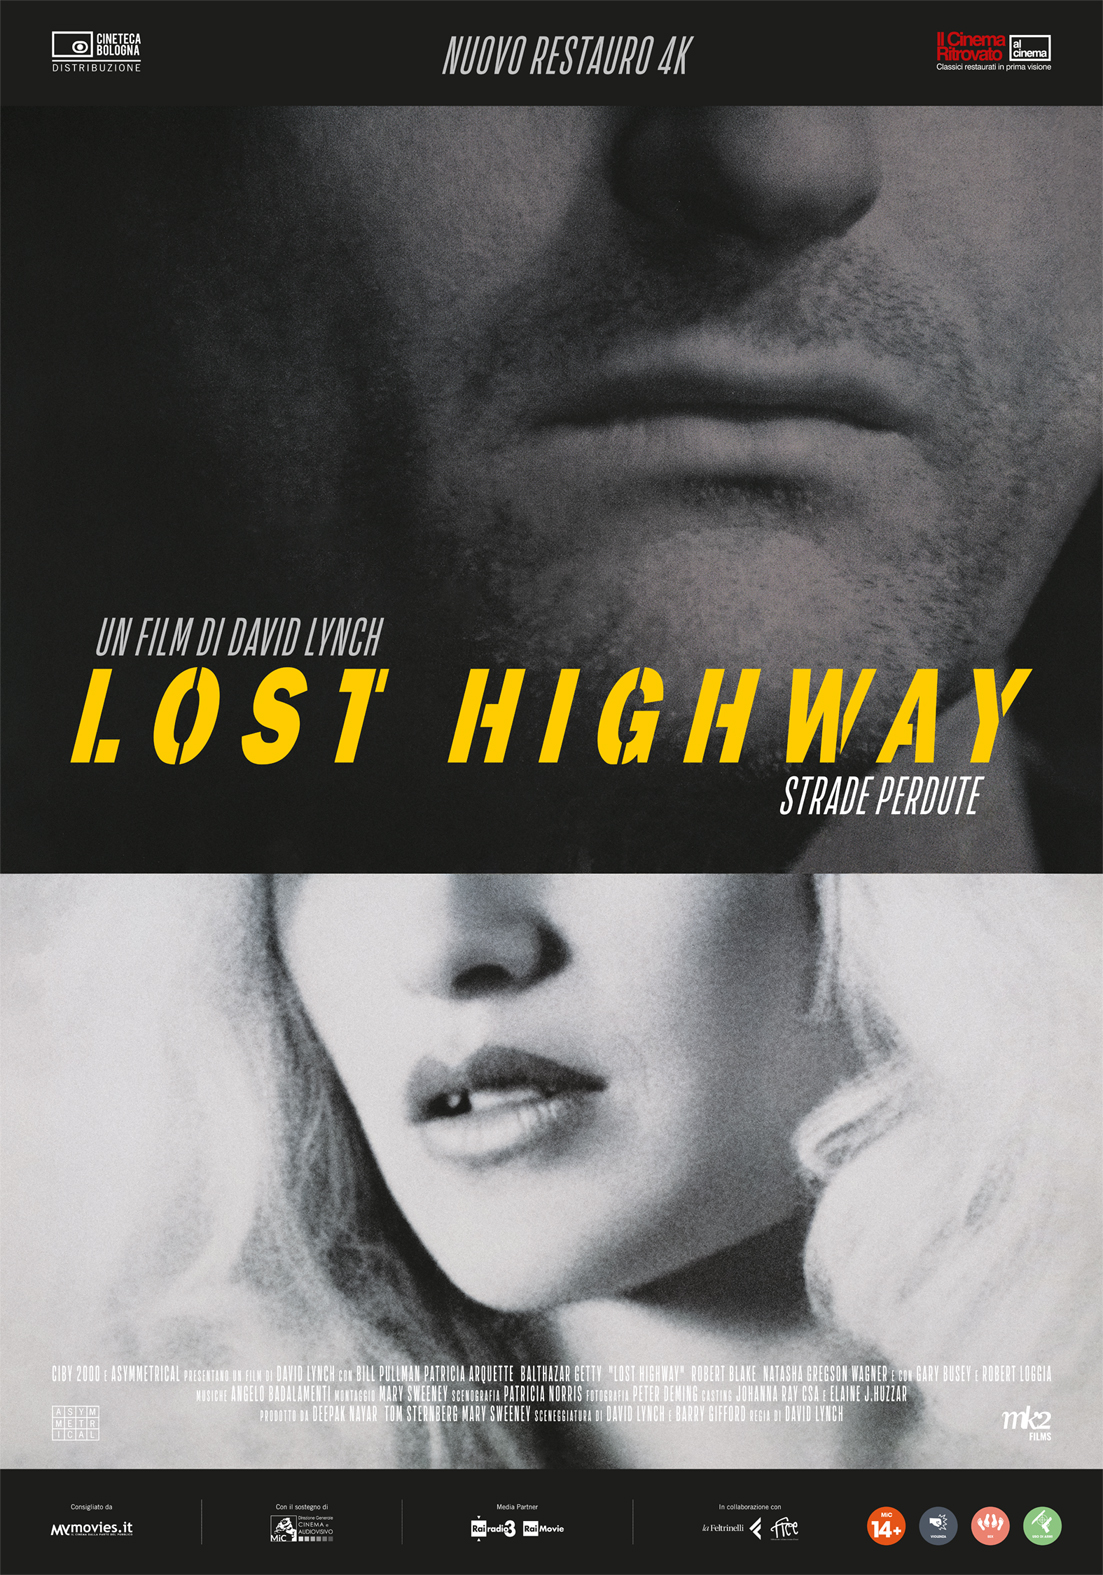 Lost Highway (Strade perdute)